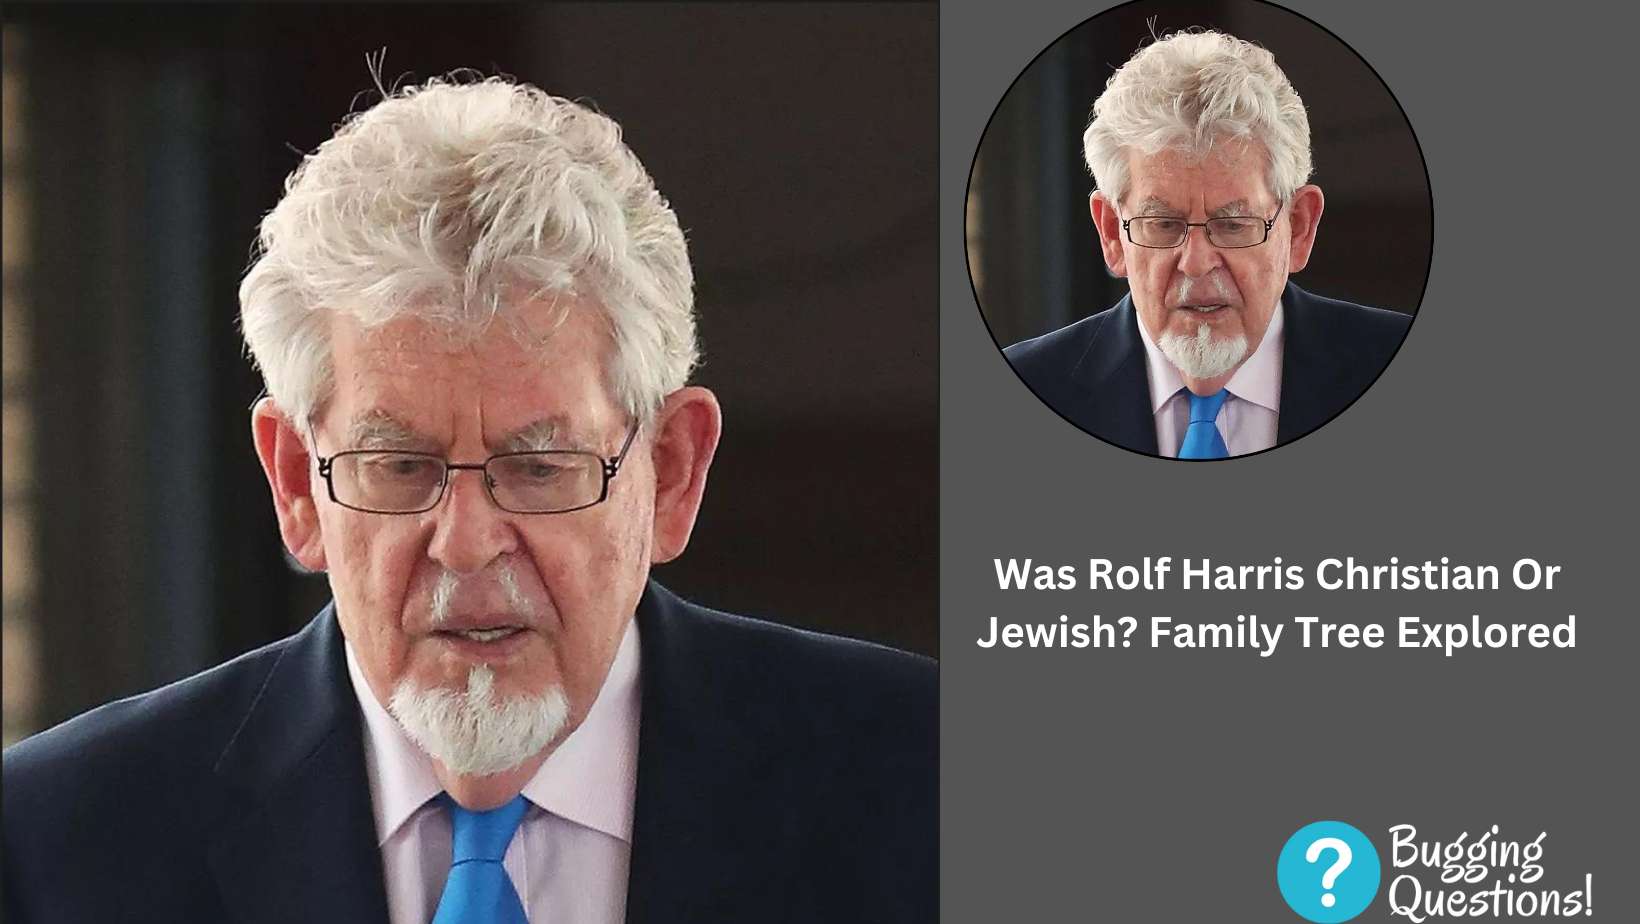 Was Rolf Harris Christian Or Jewish?